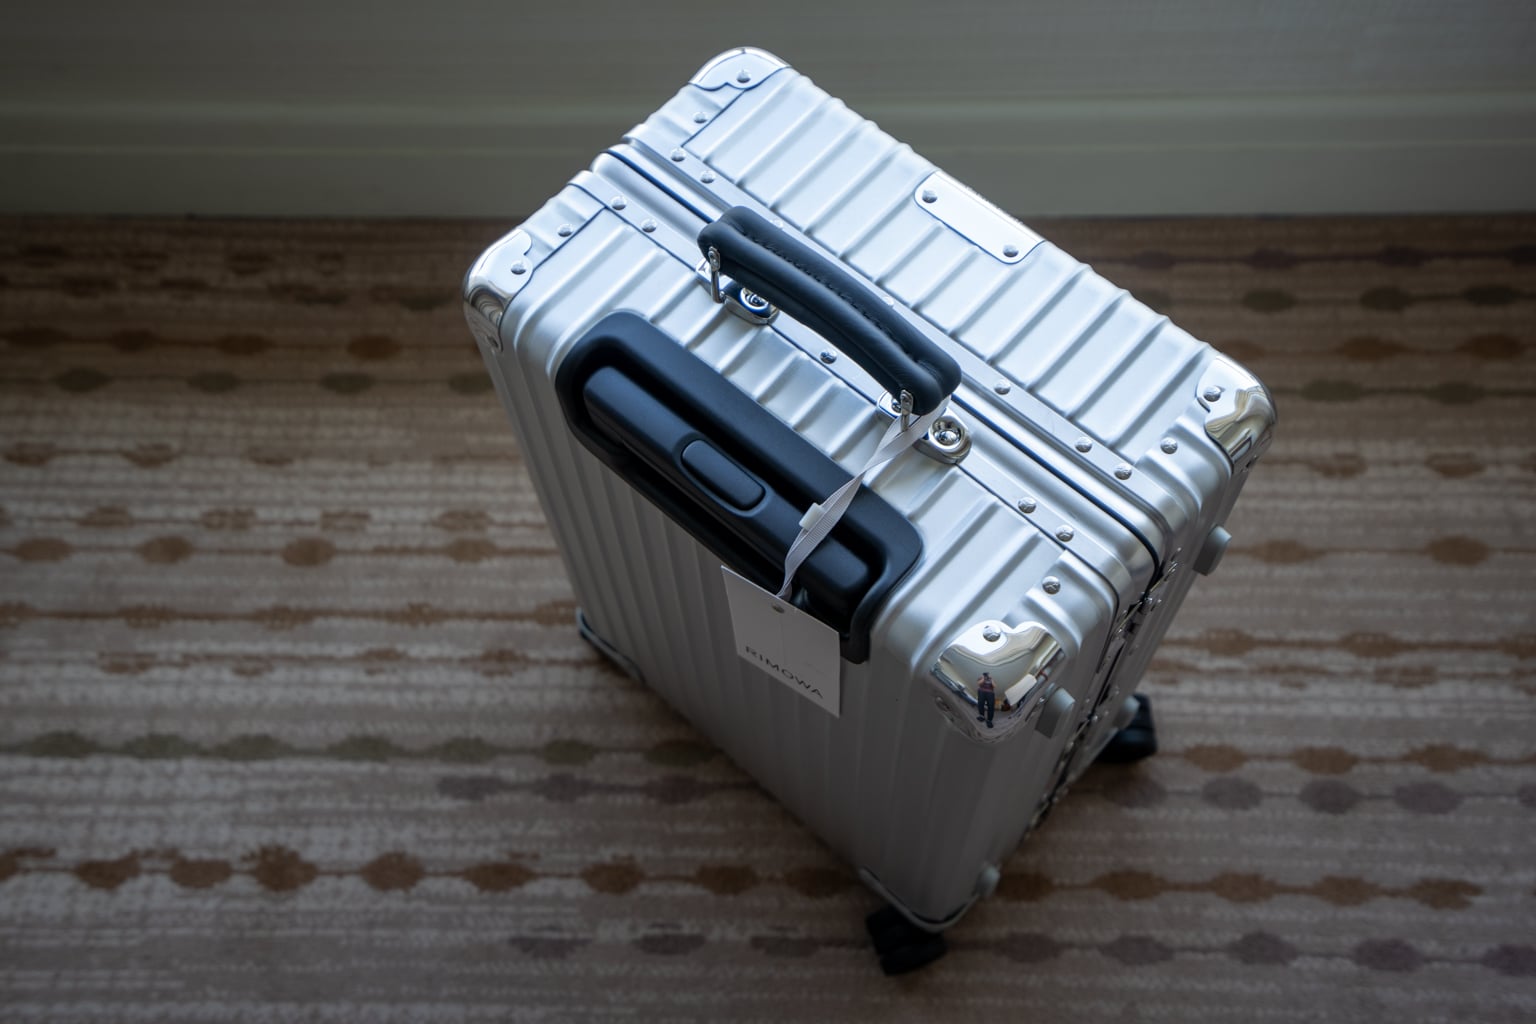 How To Unlock A RIMOWA Suitcase | TouristSecrets